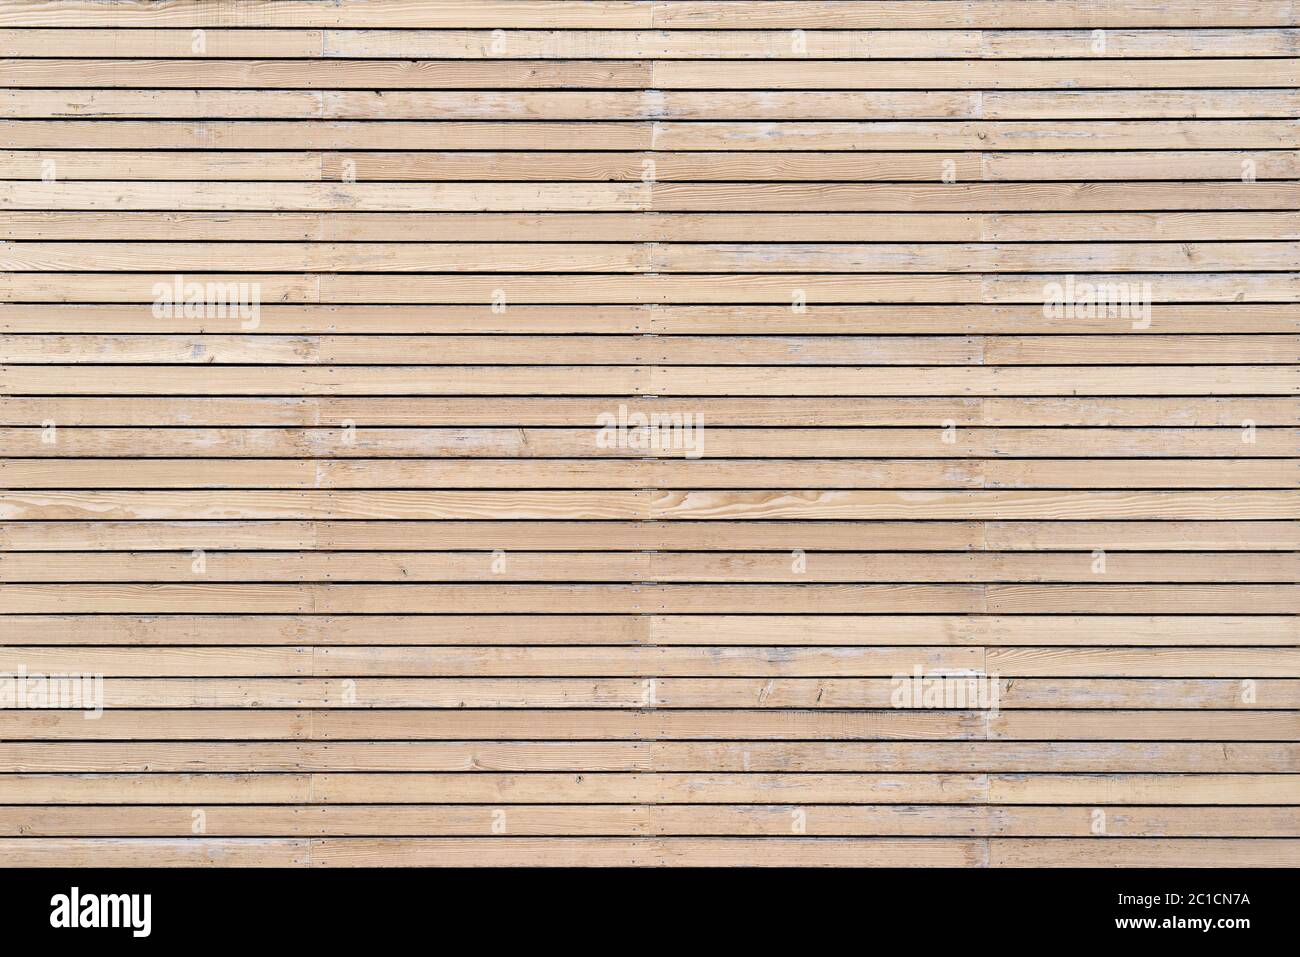 Helle, leicht verwitterte Holzfassade mit horizontalem Gitter